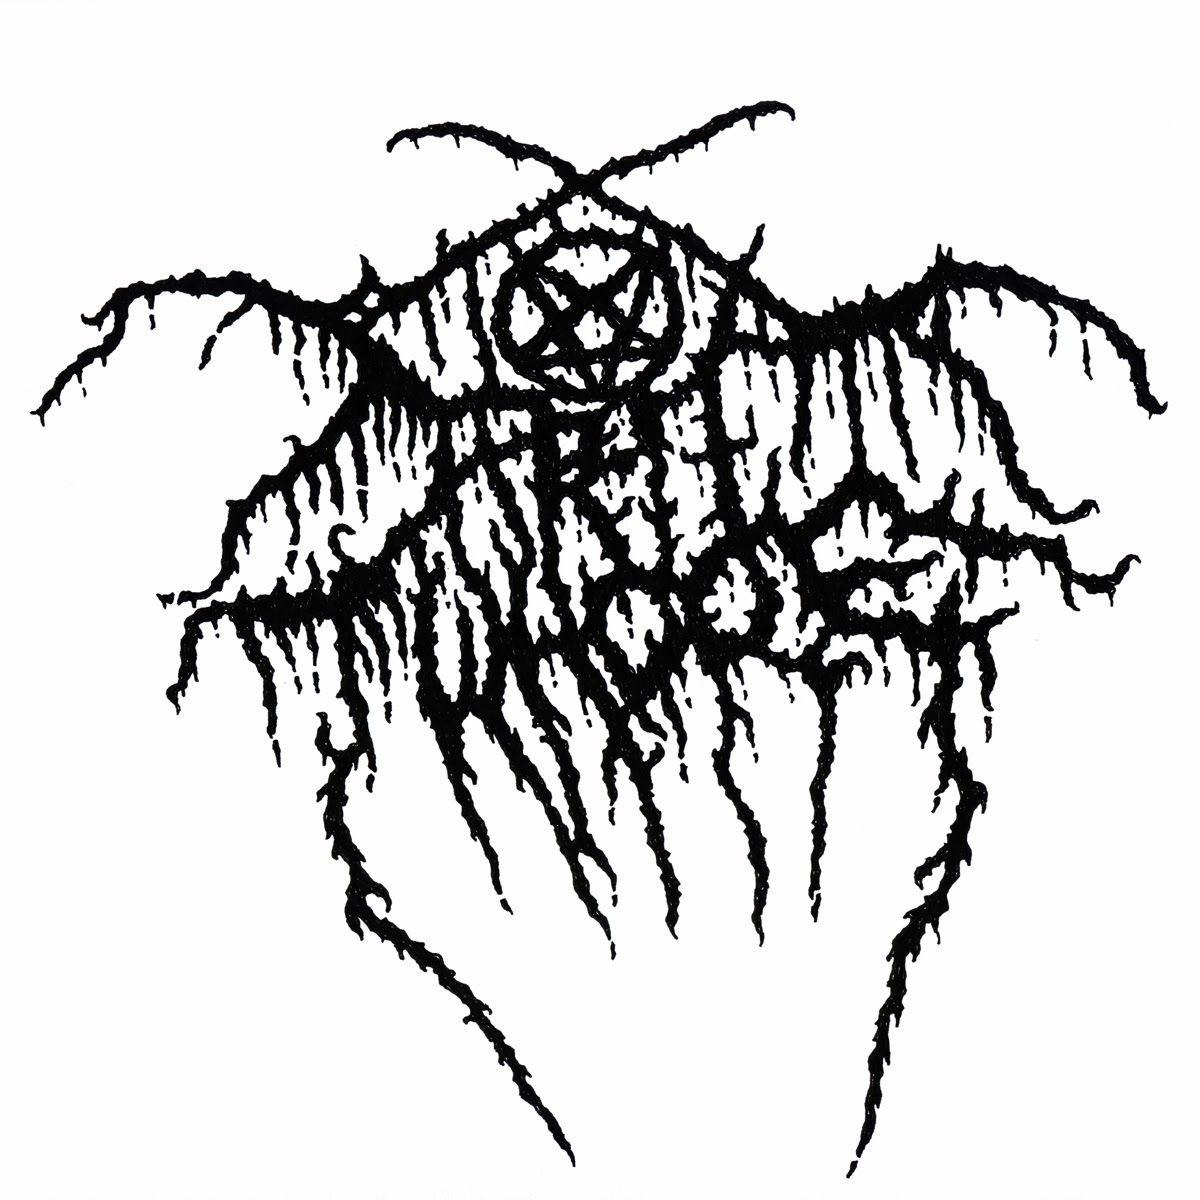 Darkthrone Logo - in nomine capricorni: Art Whore's Darkthrone rip-off logo